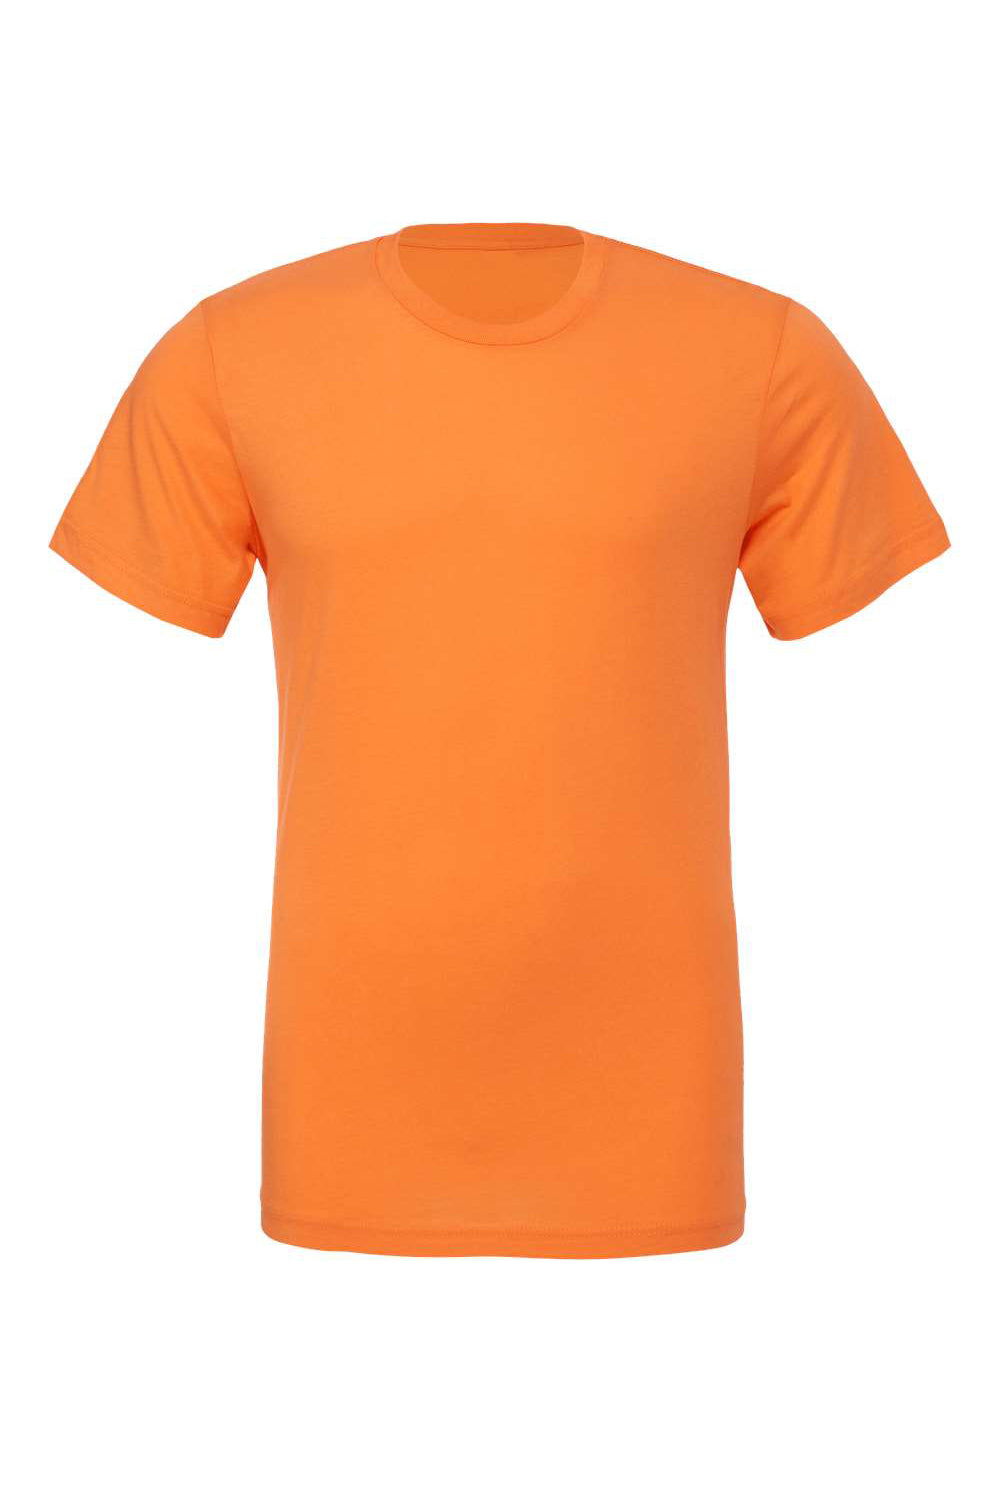 Bella + Canvas BC3001/3001C Mens Jersey Short Sleeve Crewneck T-Shirt Burnt Orange Flat Front